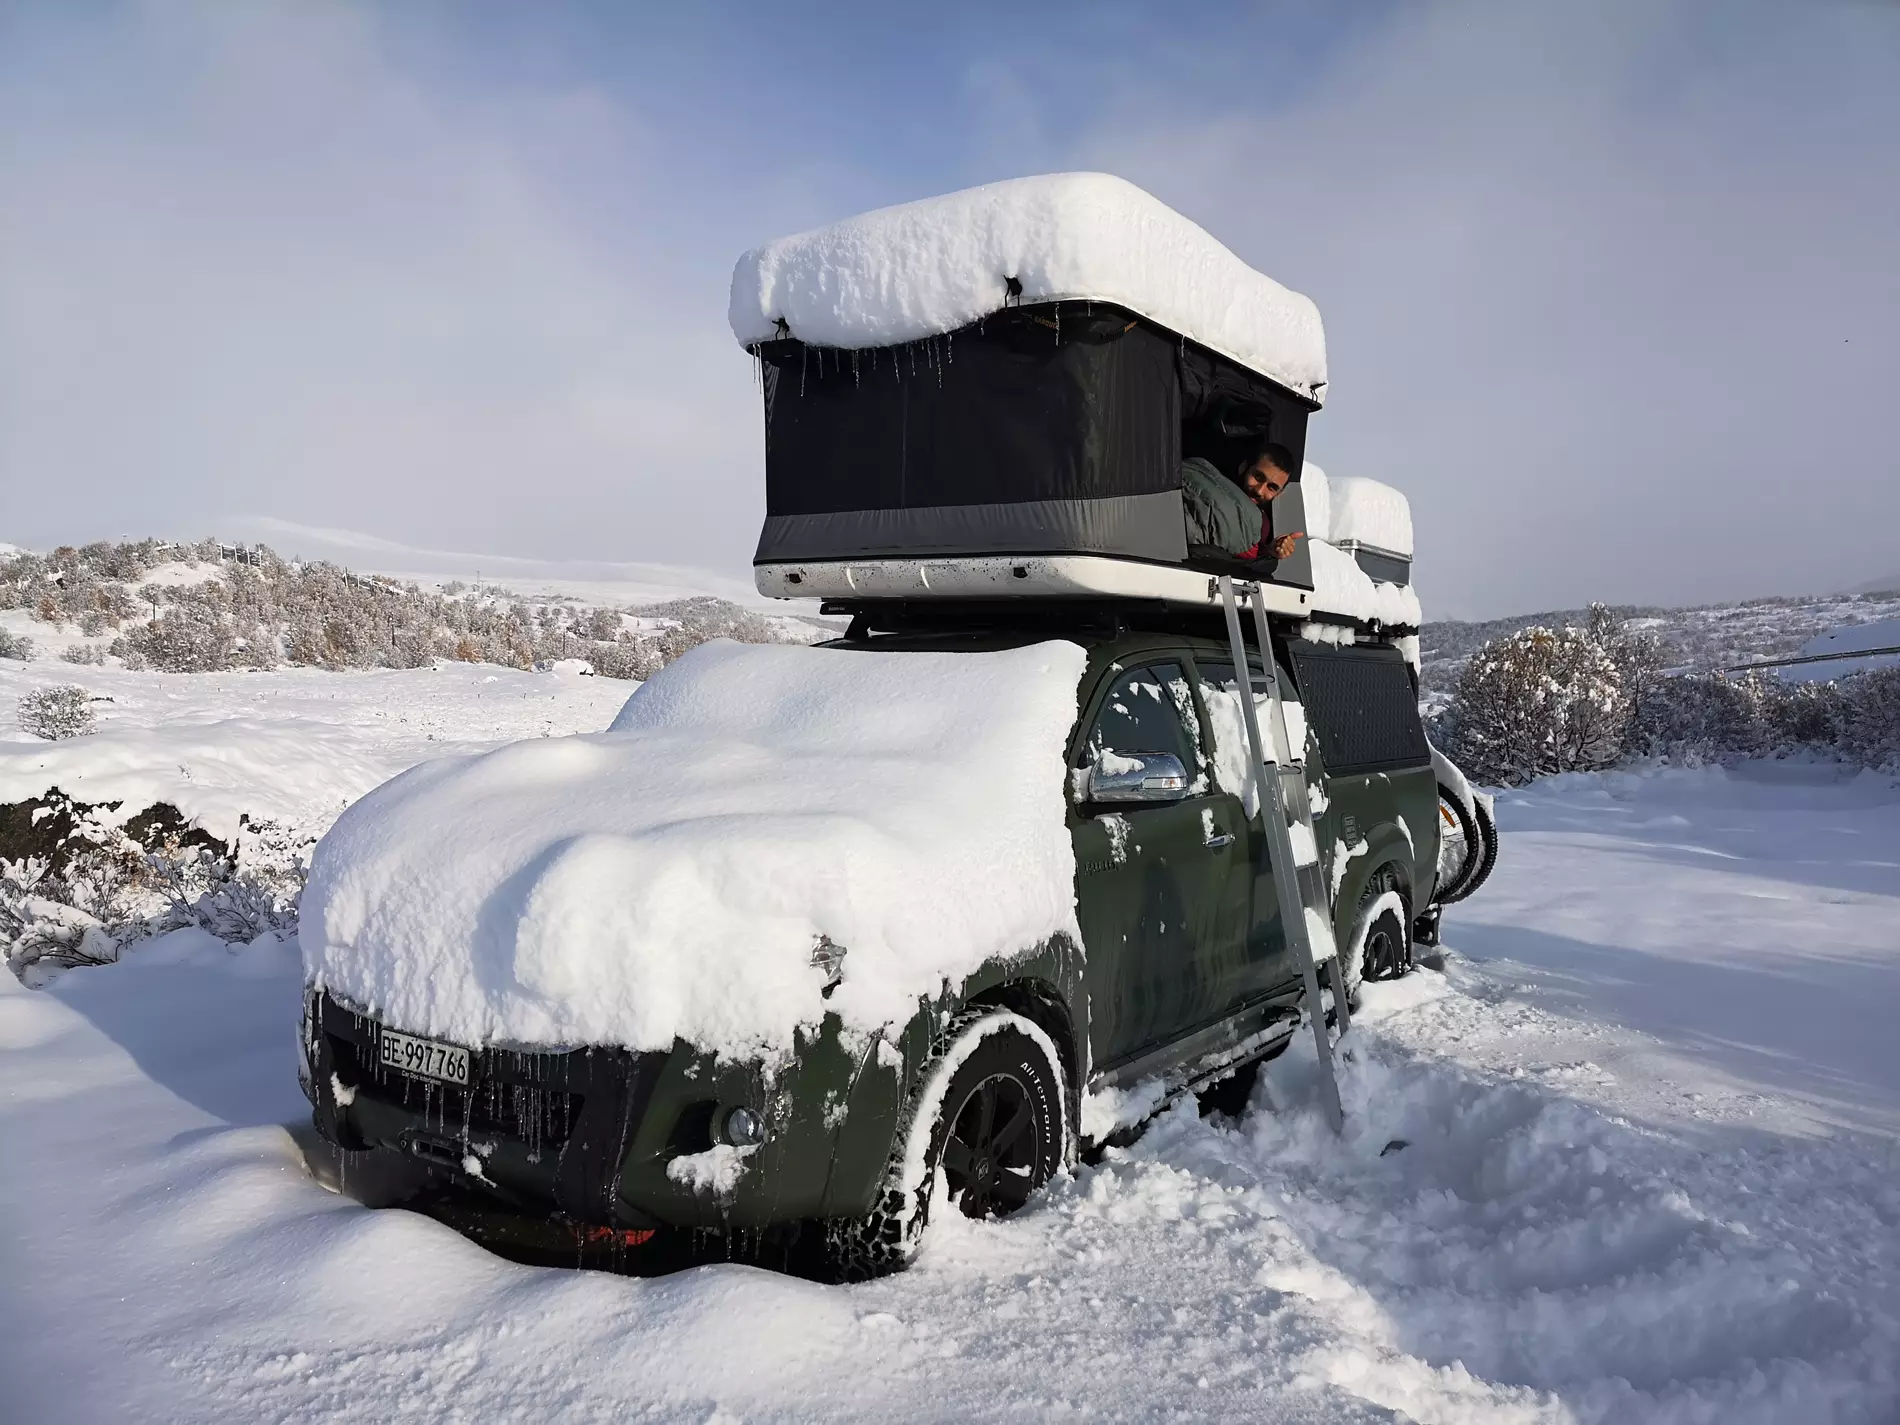 Priscilla-von-Känel-snow camping with a James Baroud Evasion